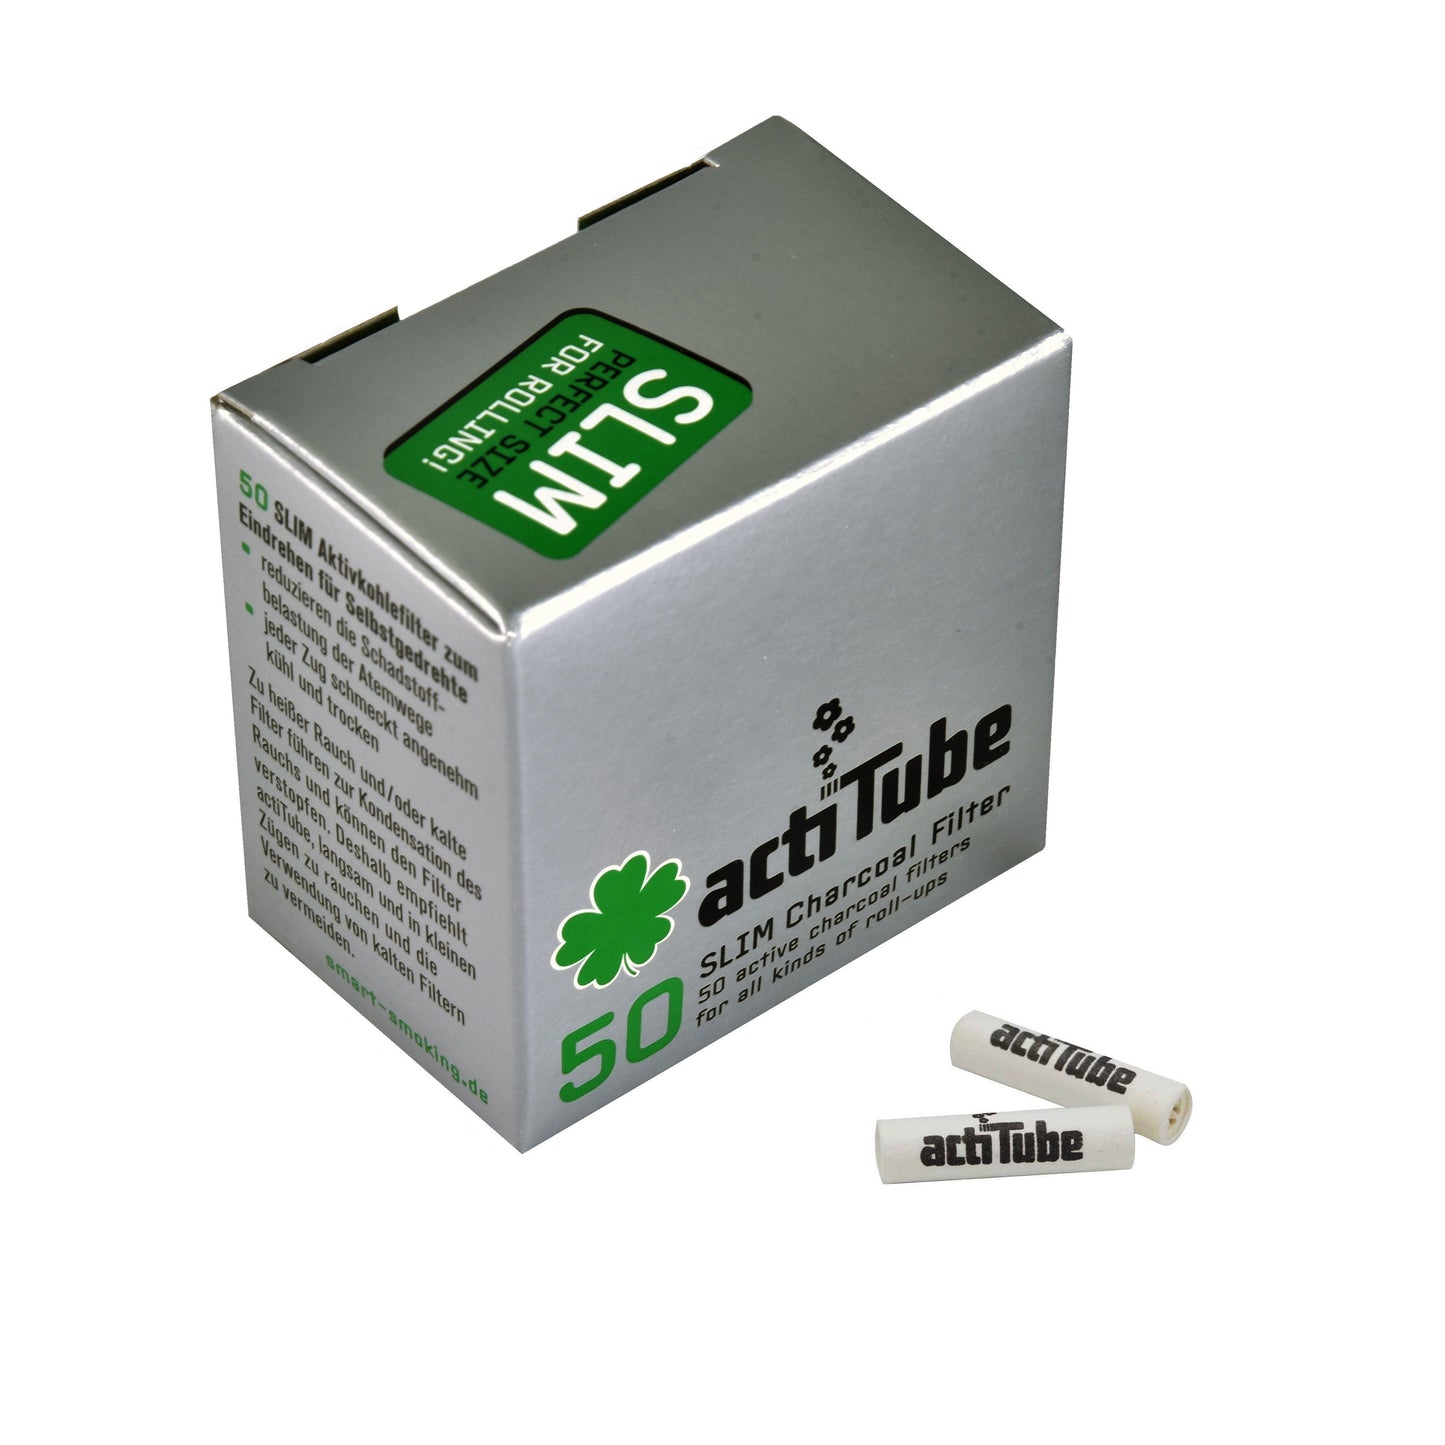 Actitube Slim Charcoal Filter 50 Filters (1 Packs) - Zetla